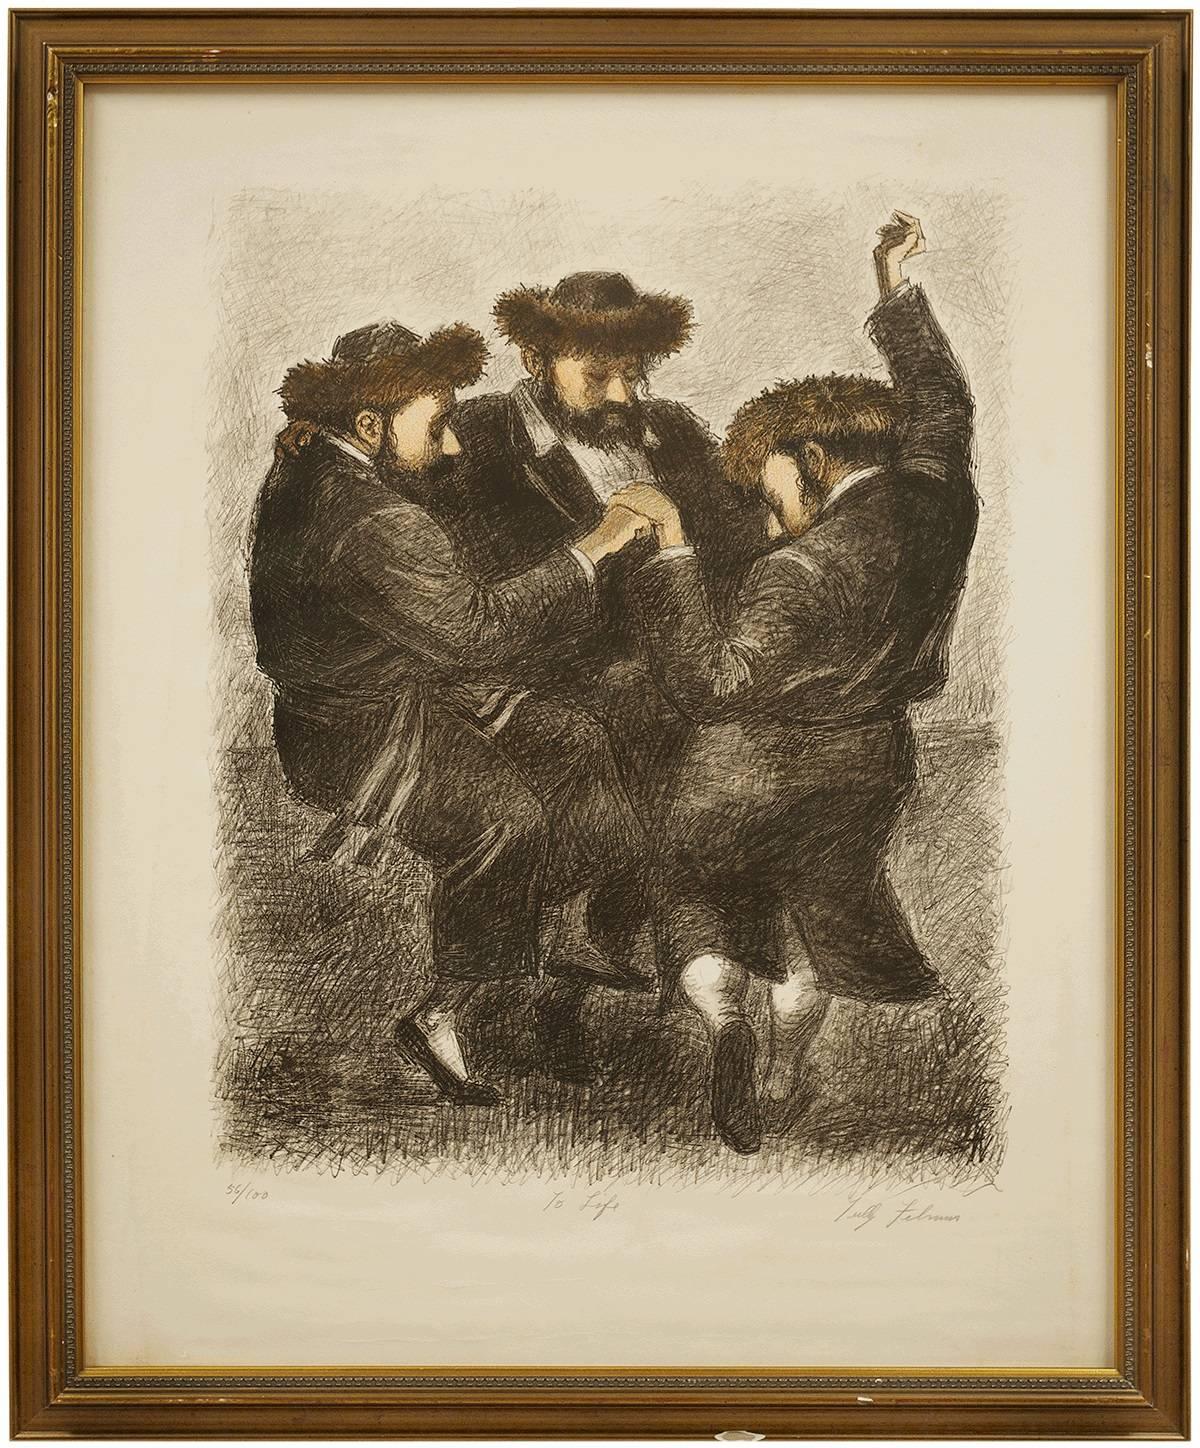 Tully Filmus Figurative Print - Hasidic Dance "To Life" L'Chaim Judaica Lithograph